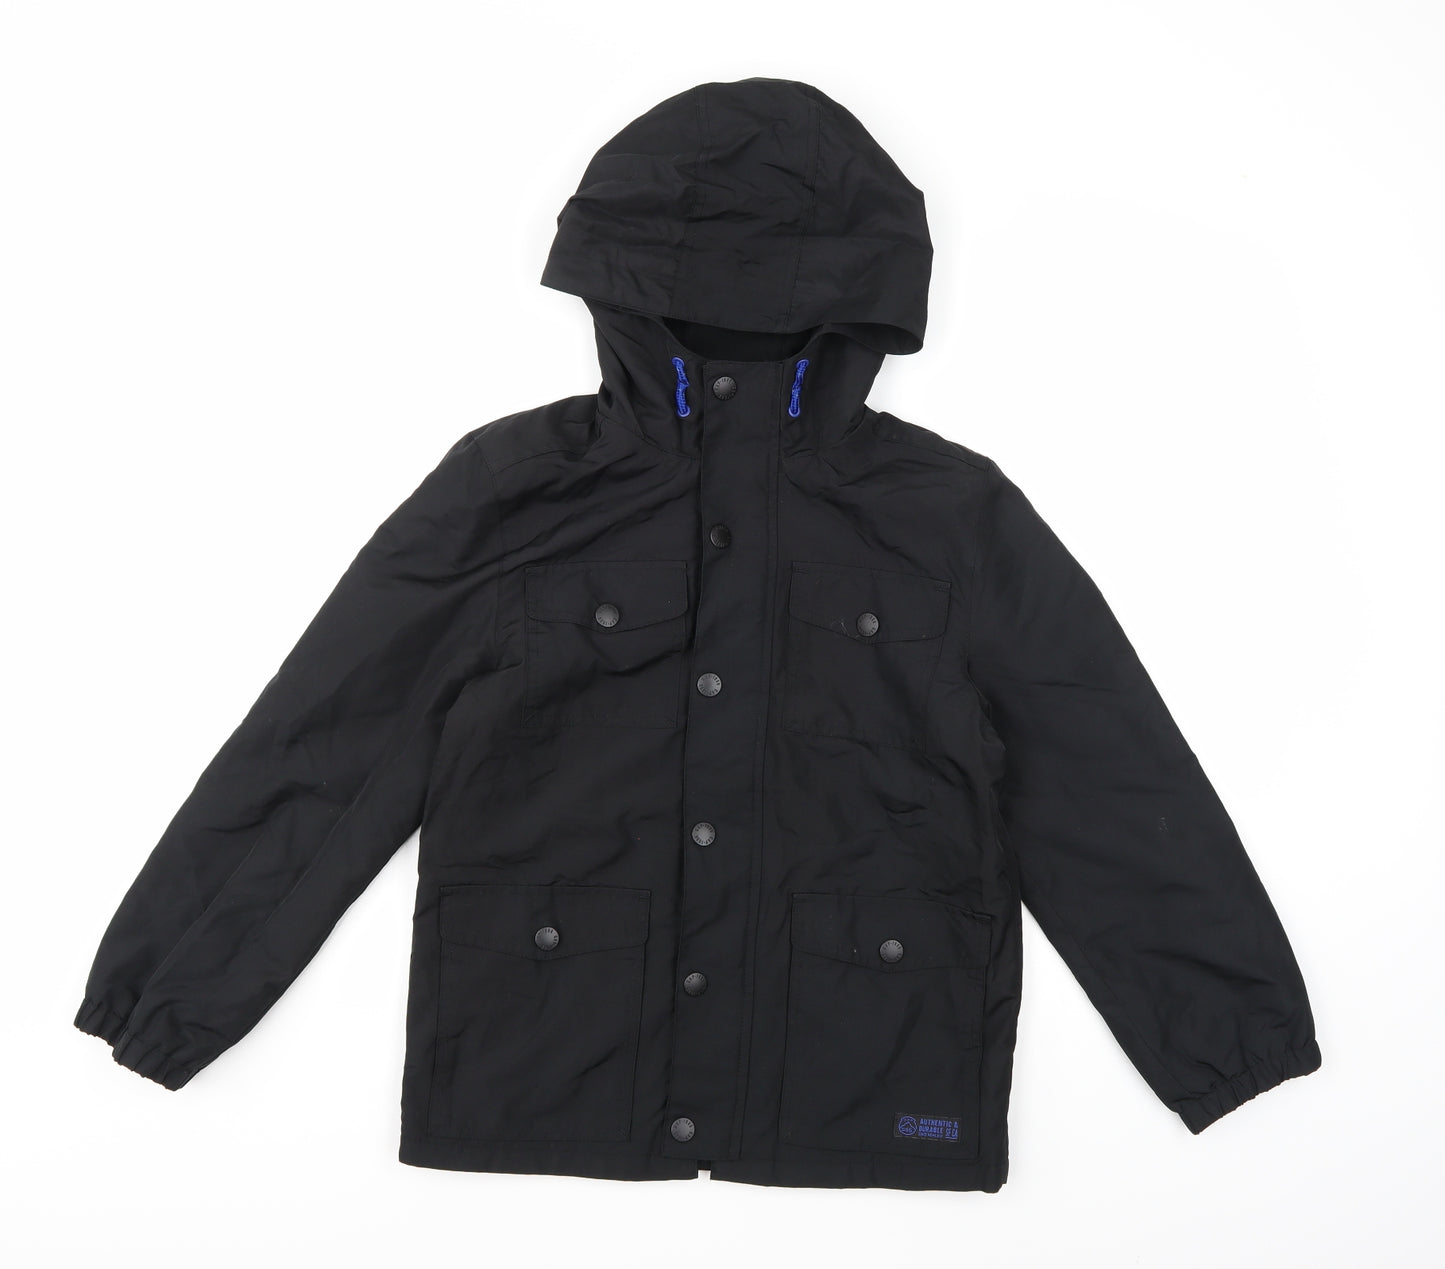 Gap Boys Black   Rain Coat Coat Size 10-11 Years